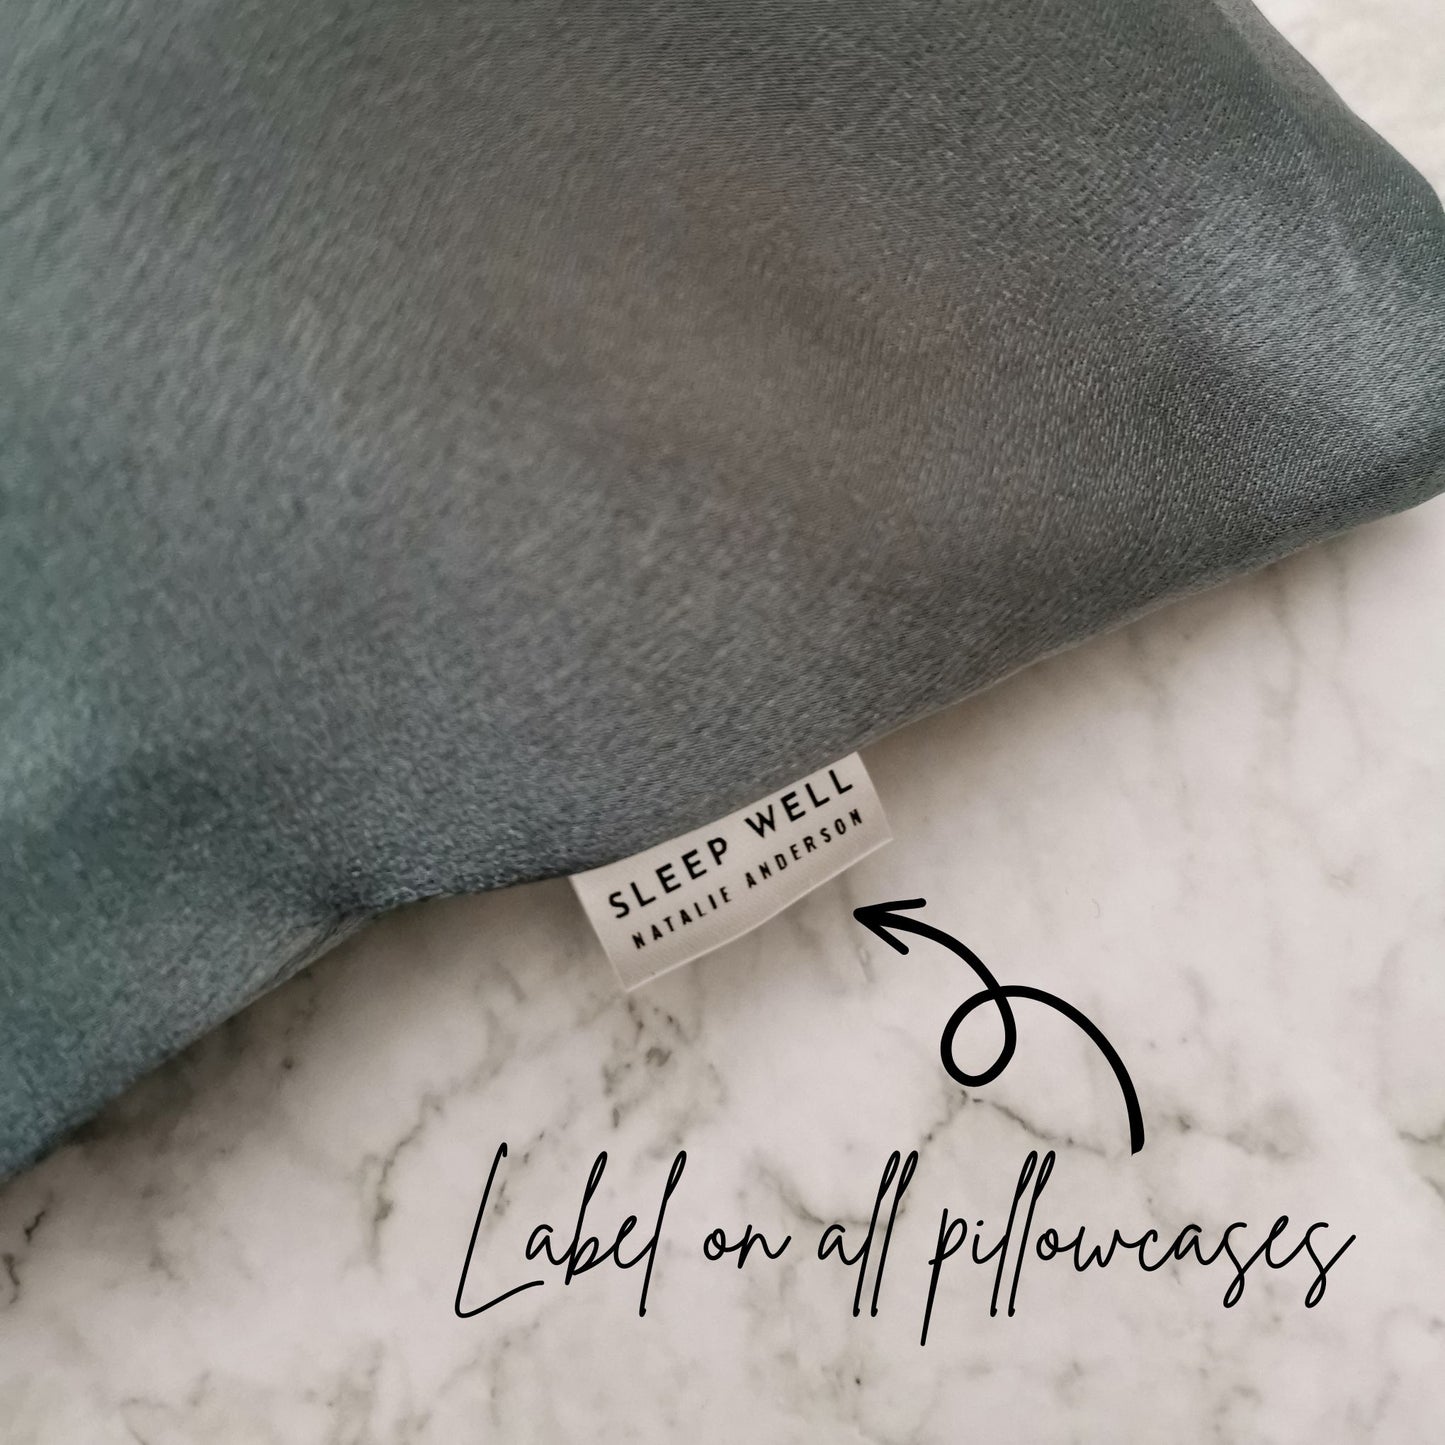 Steel grey sleep well label on all satin poly silk pillowcases